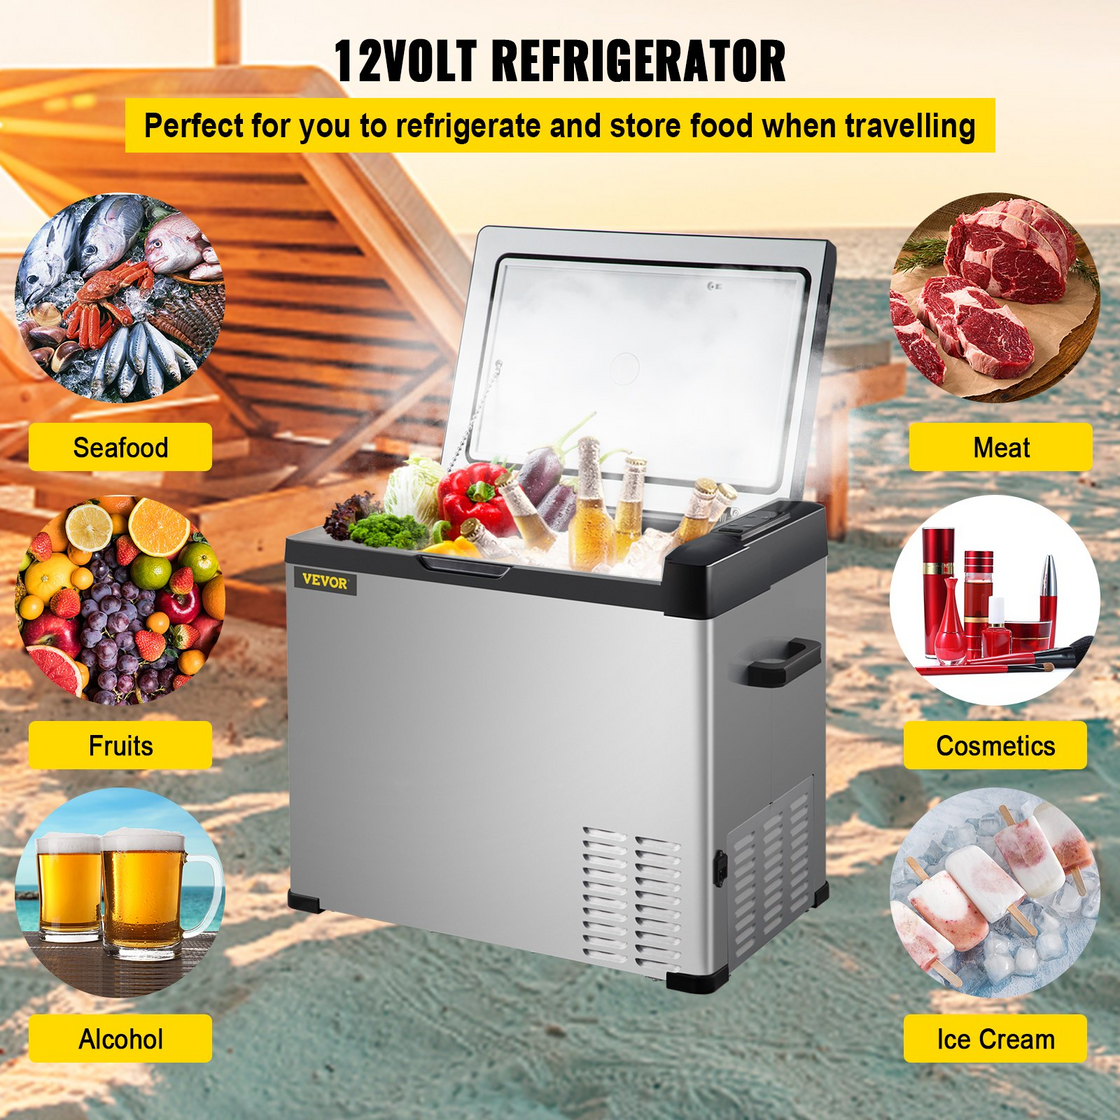 VEVOR 12 Volt Refrigerator, Portable Fridge Cooler (32 Quart)